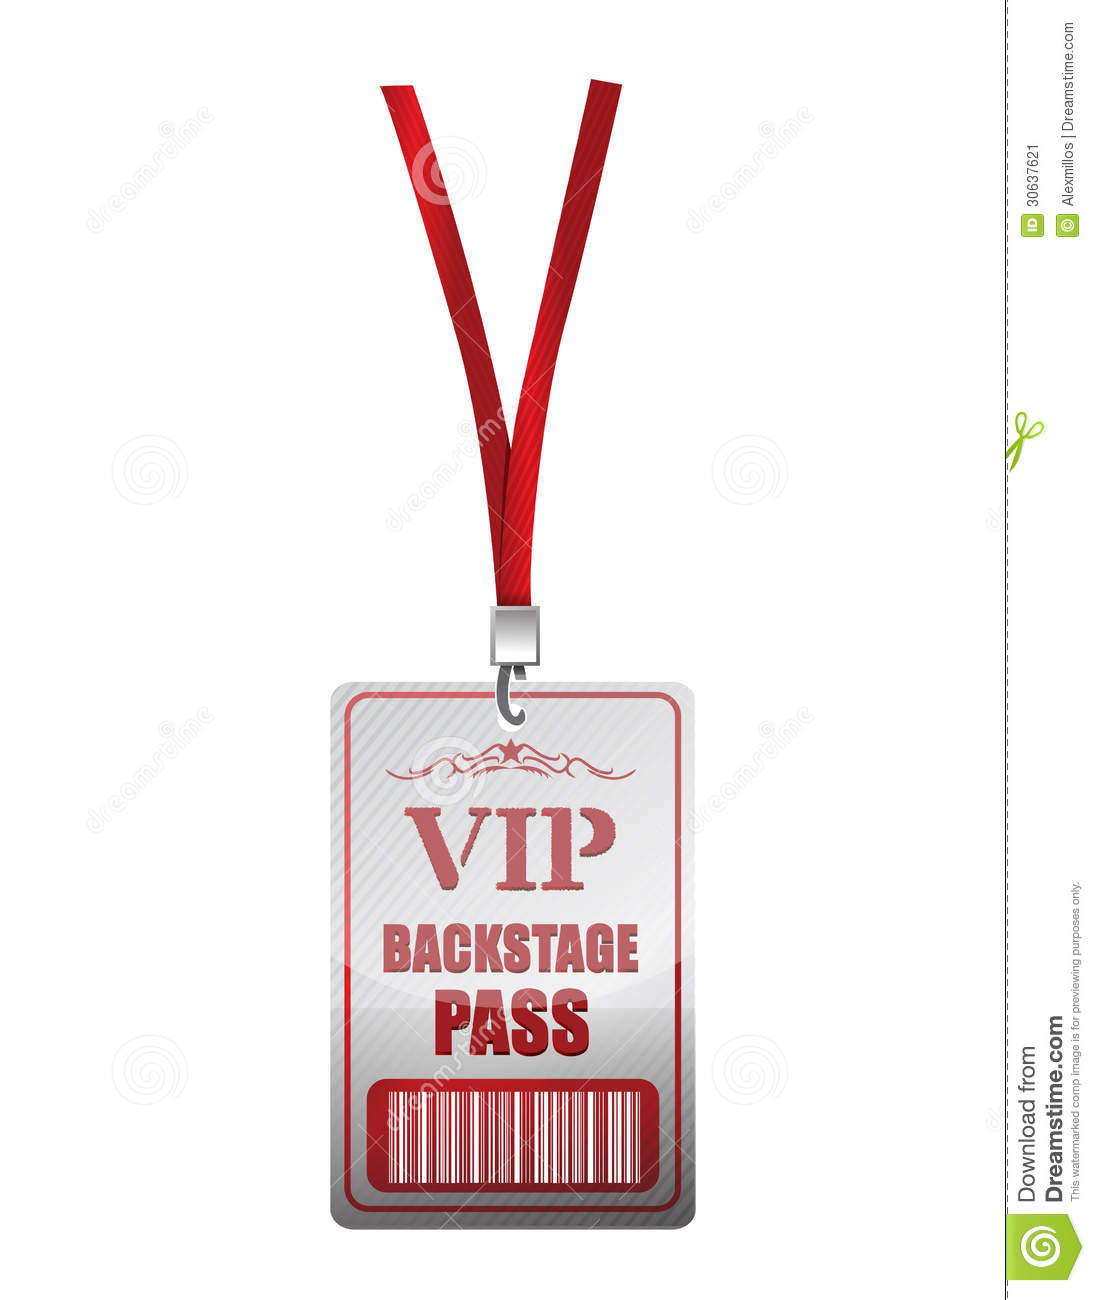 Backstage Pass #26